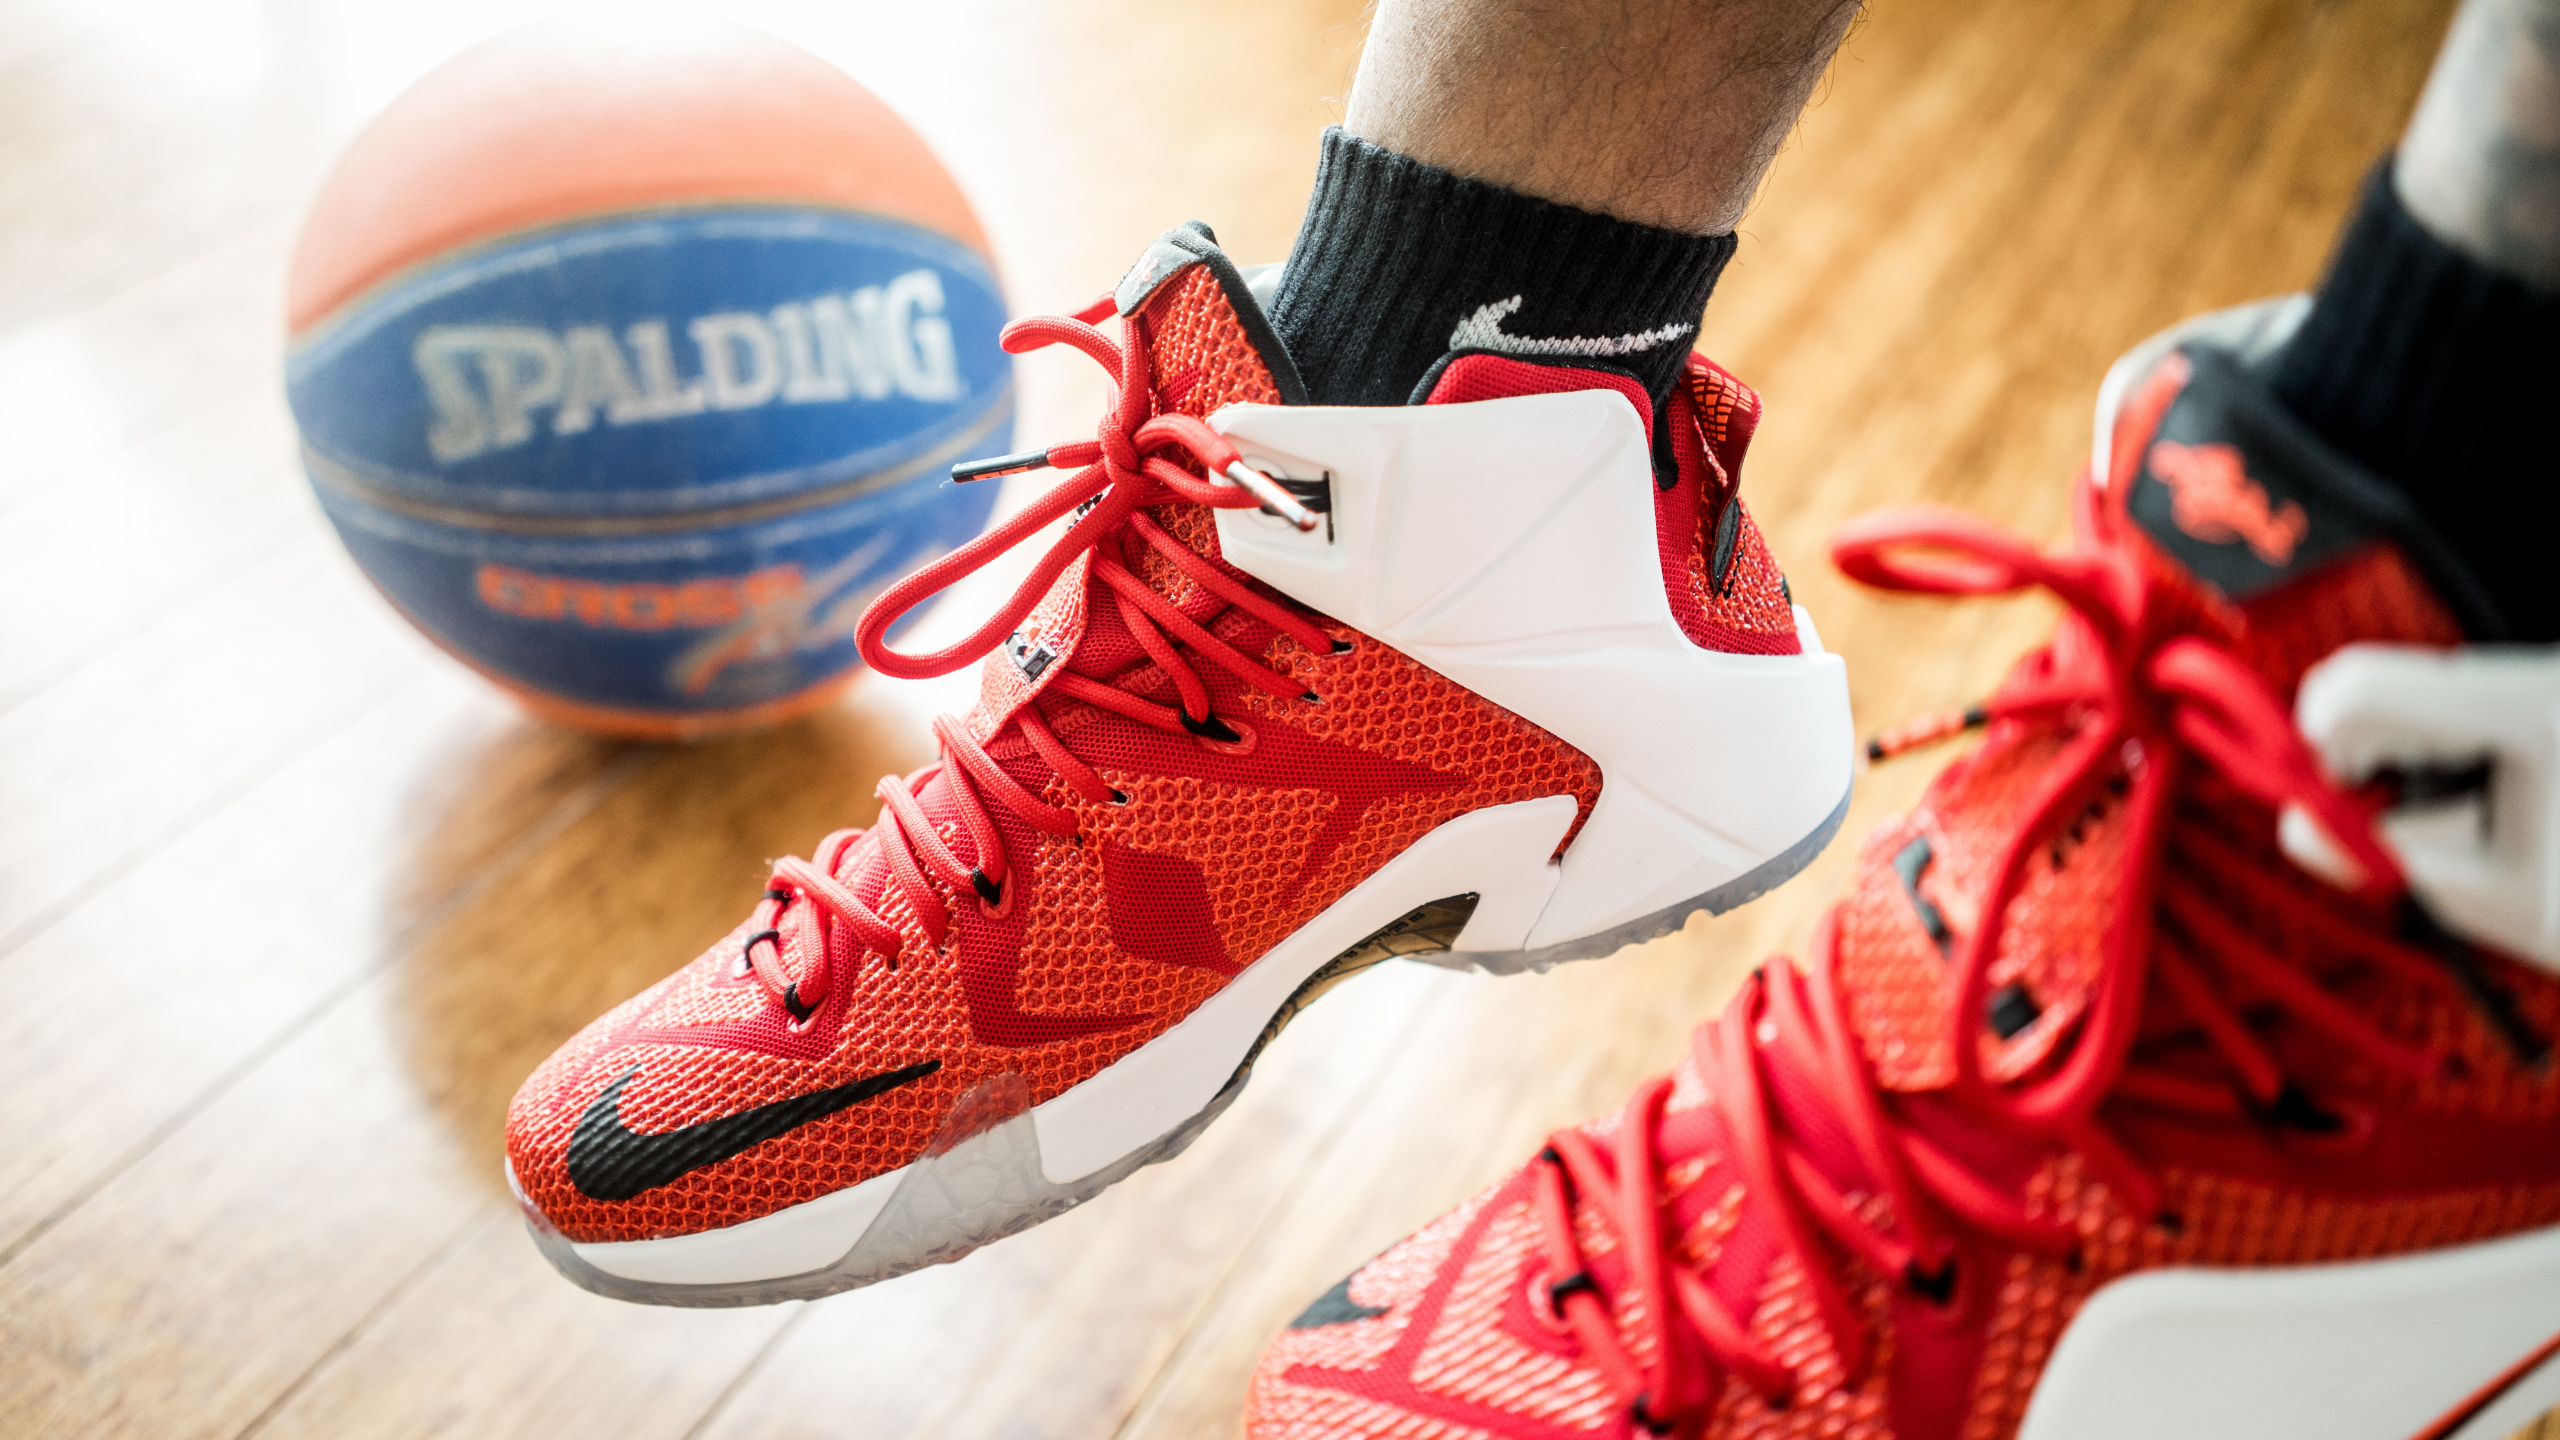 Personne Portant Des Chaussures de Basket-ball Nike Rouges. Wallpaper in 2560x1440 Resolution